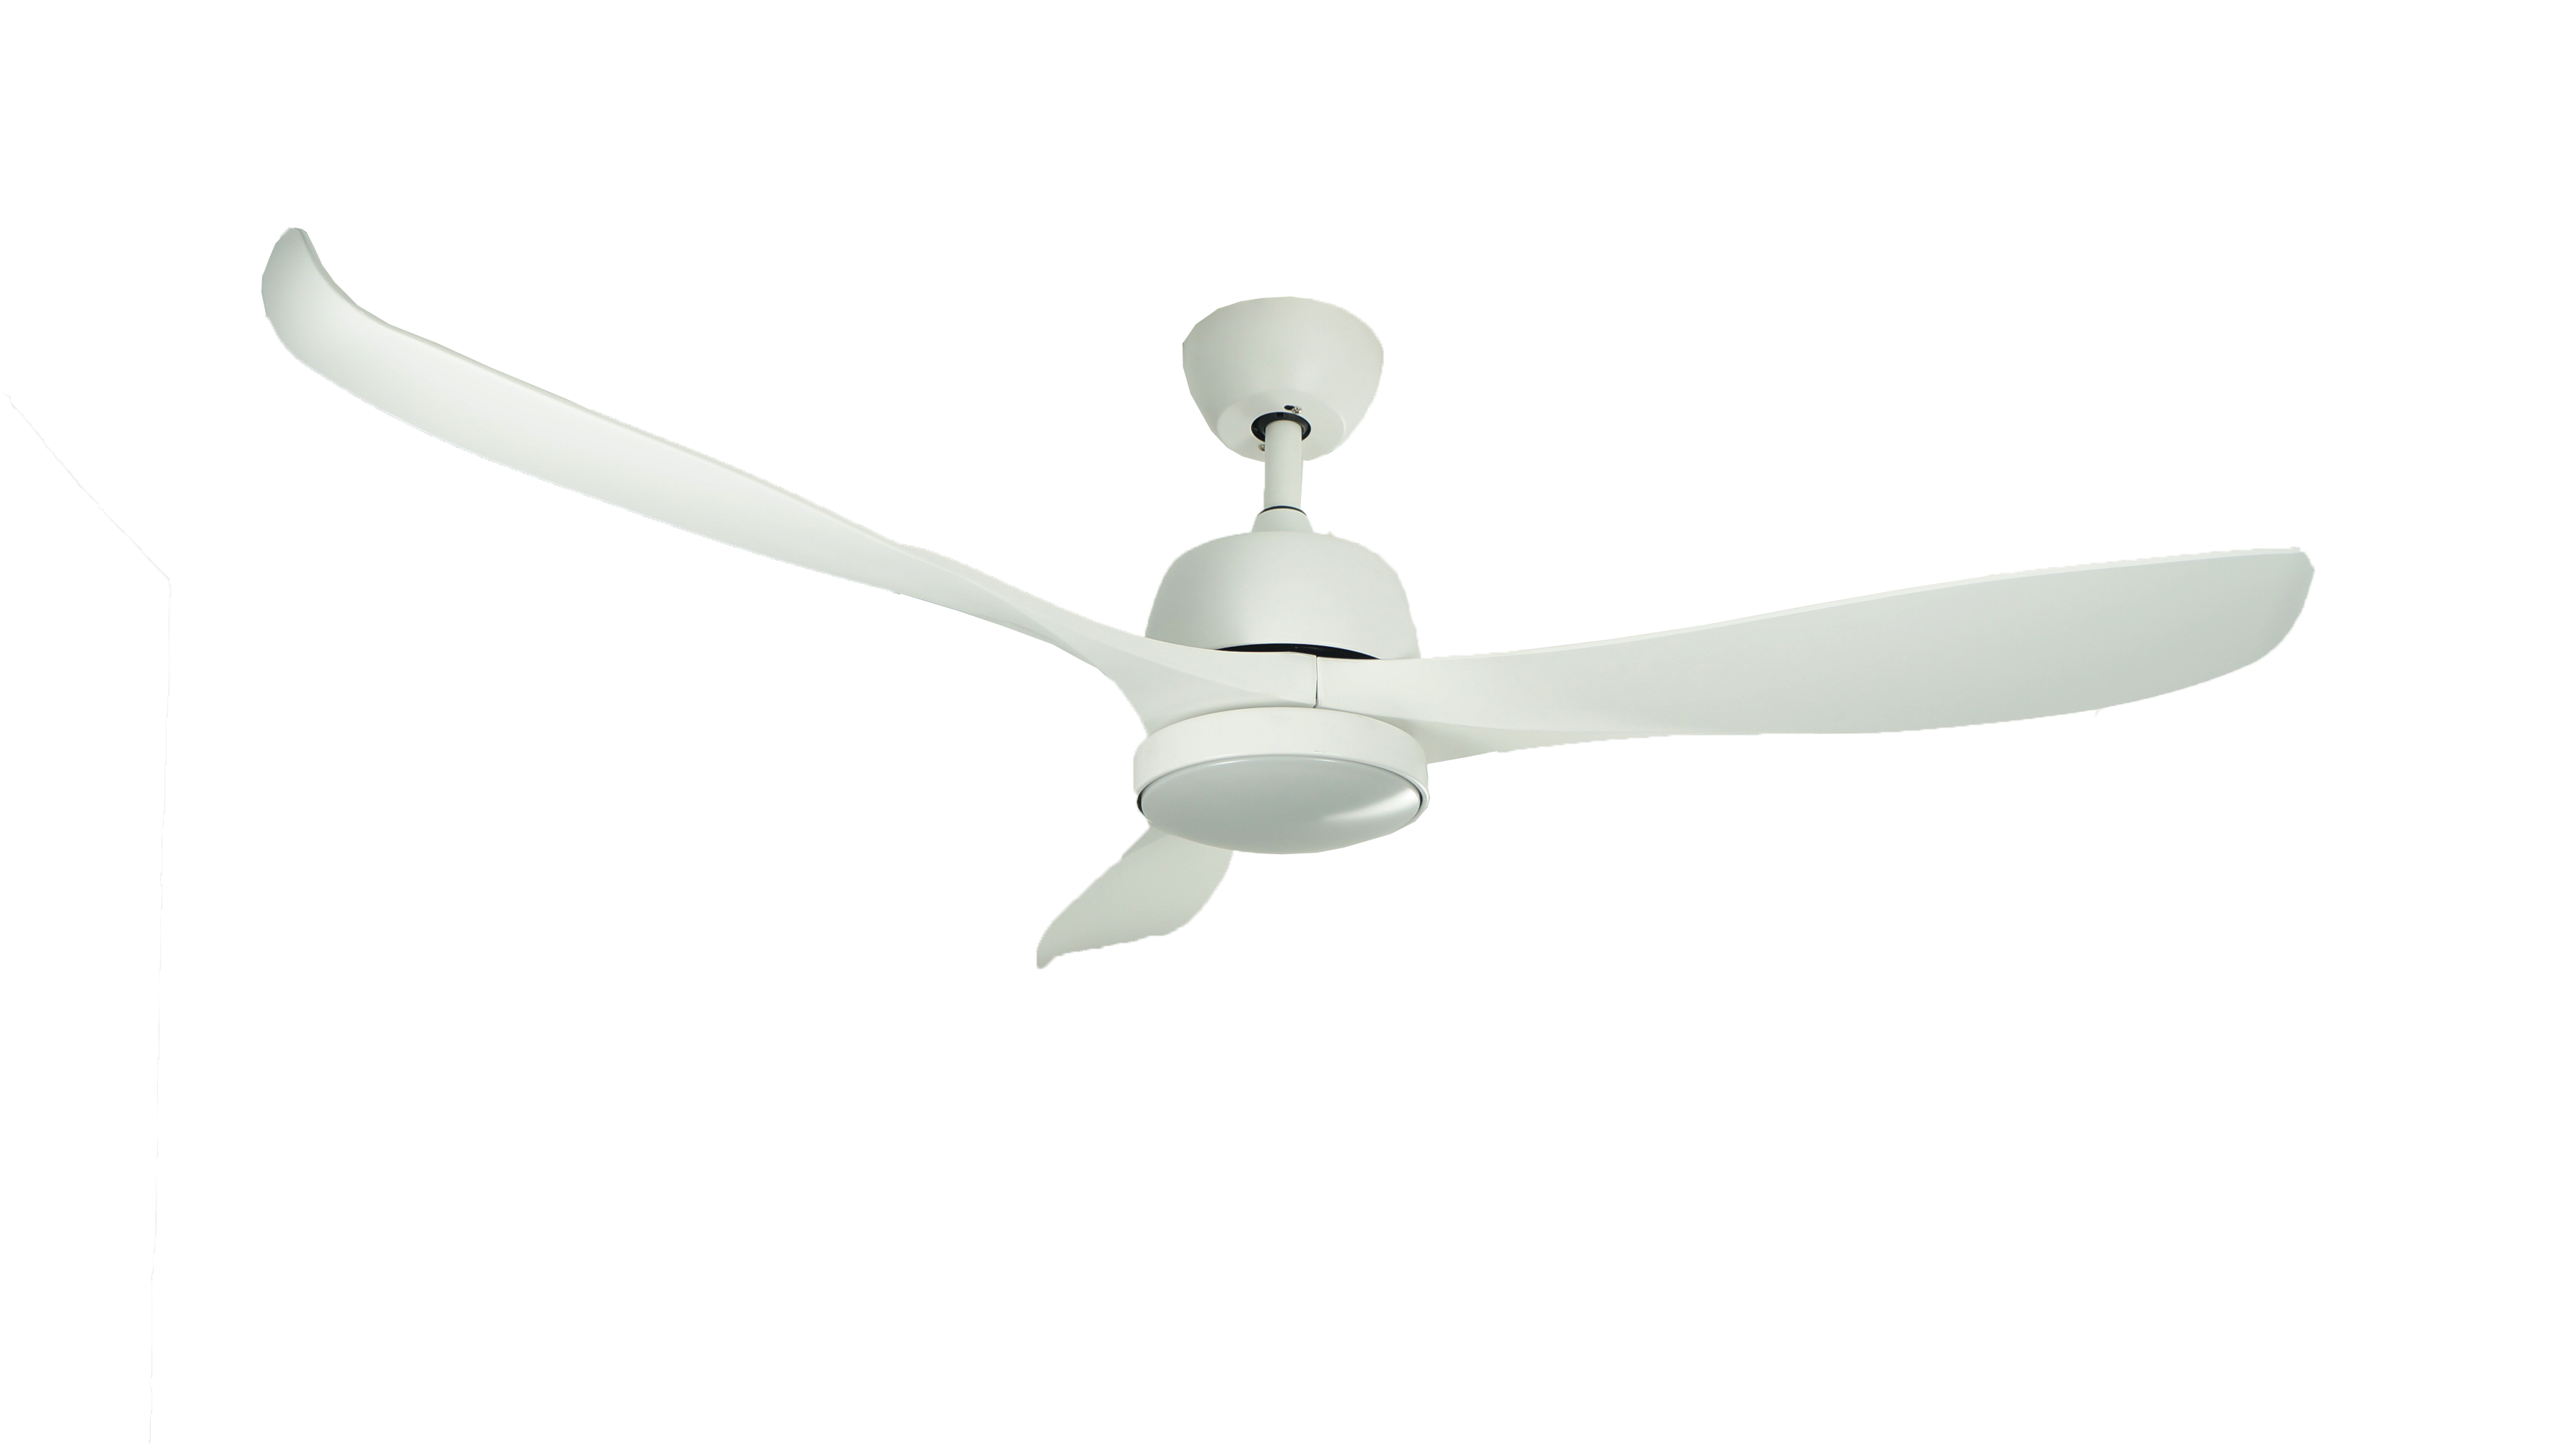 Control remoto del ventilador de techo de la sala de estar del hogar